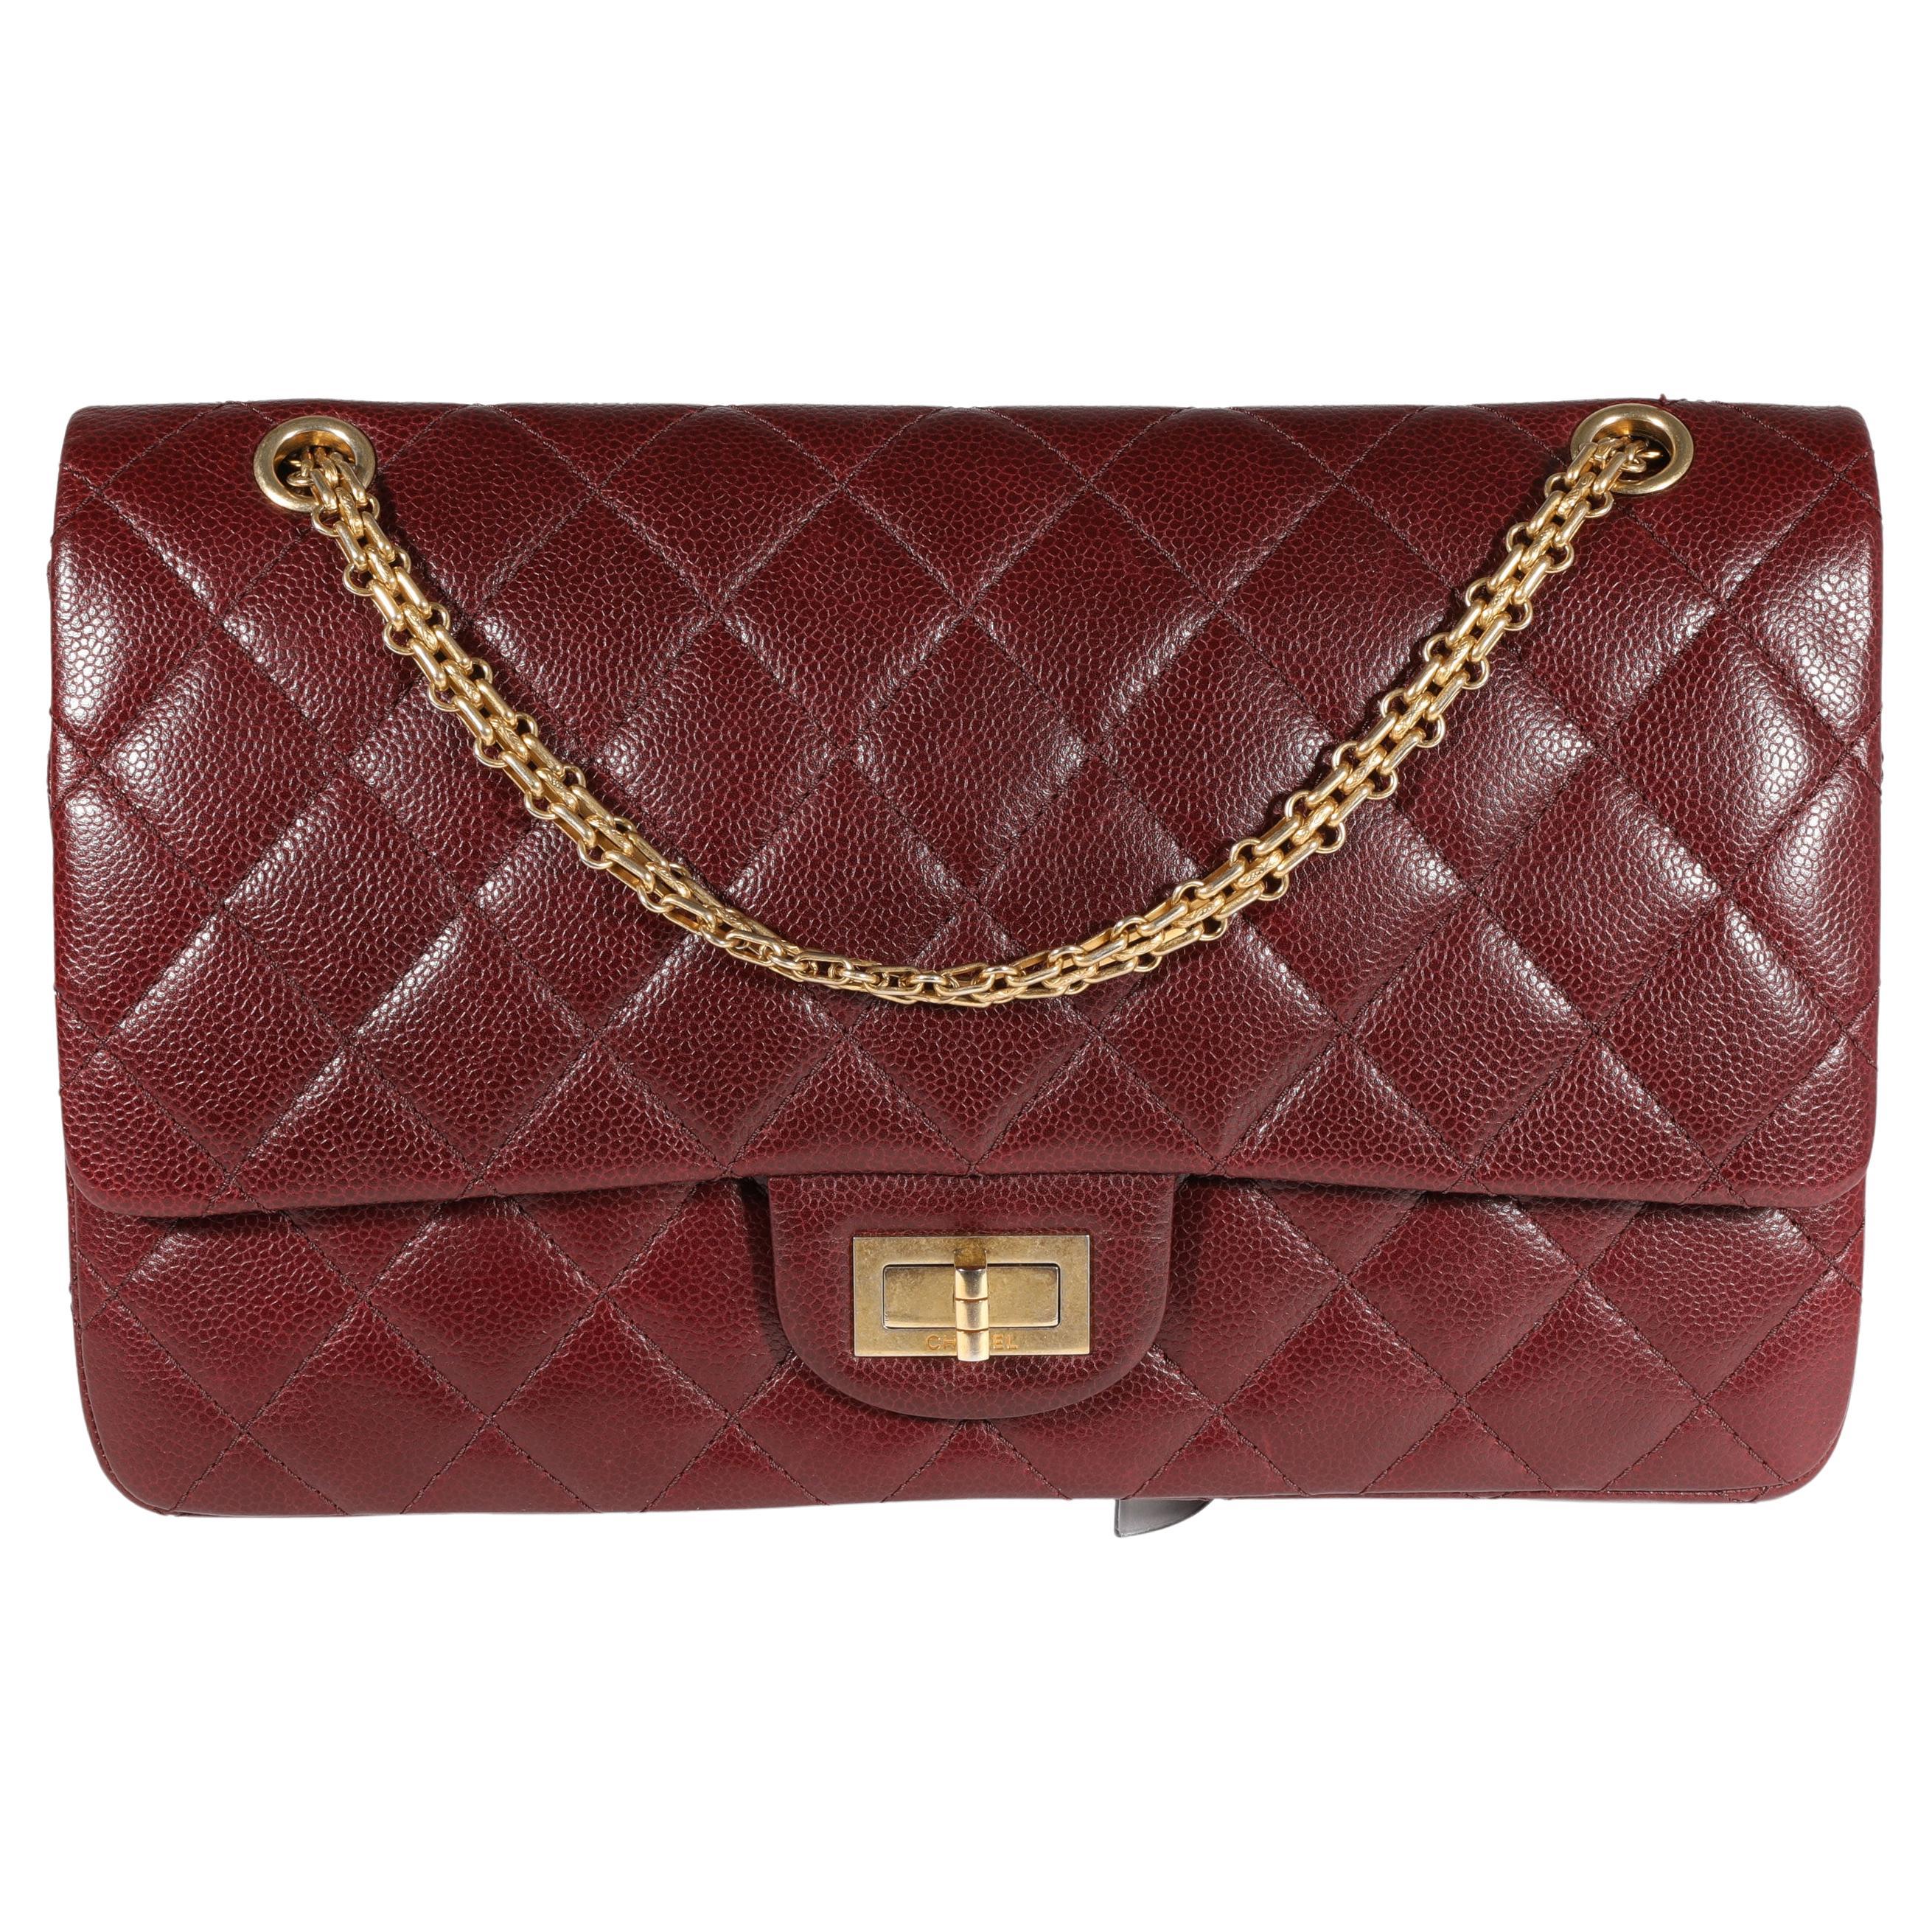 Authentic Chanel Reissue 2.55 227 Patent Dark Burgundy Bag